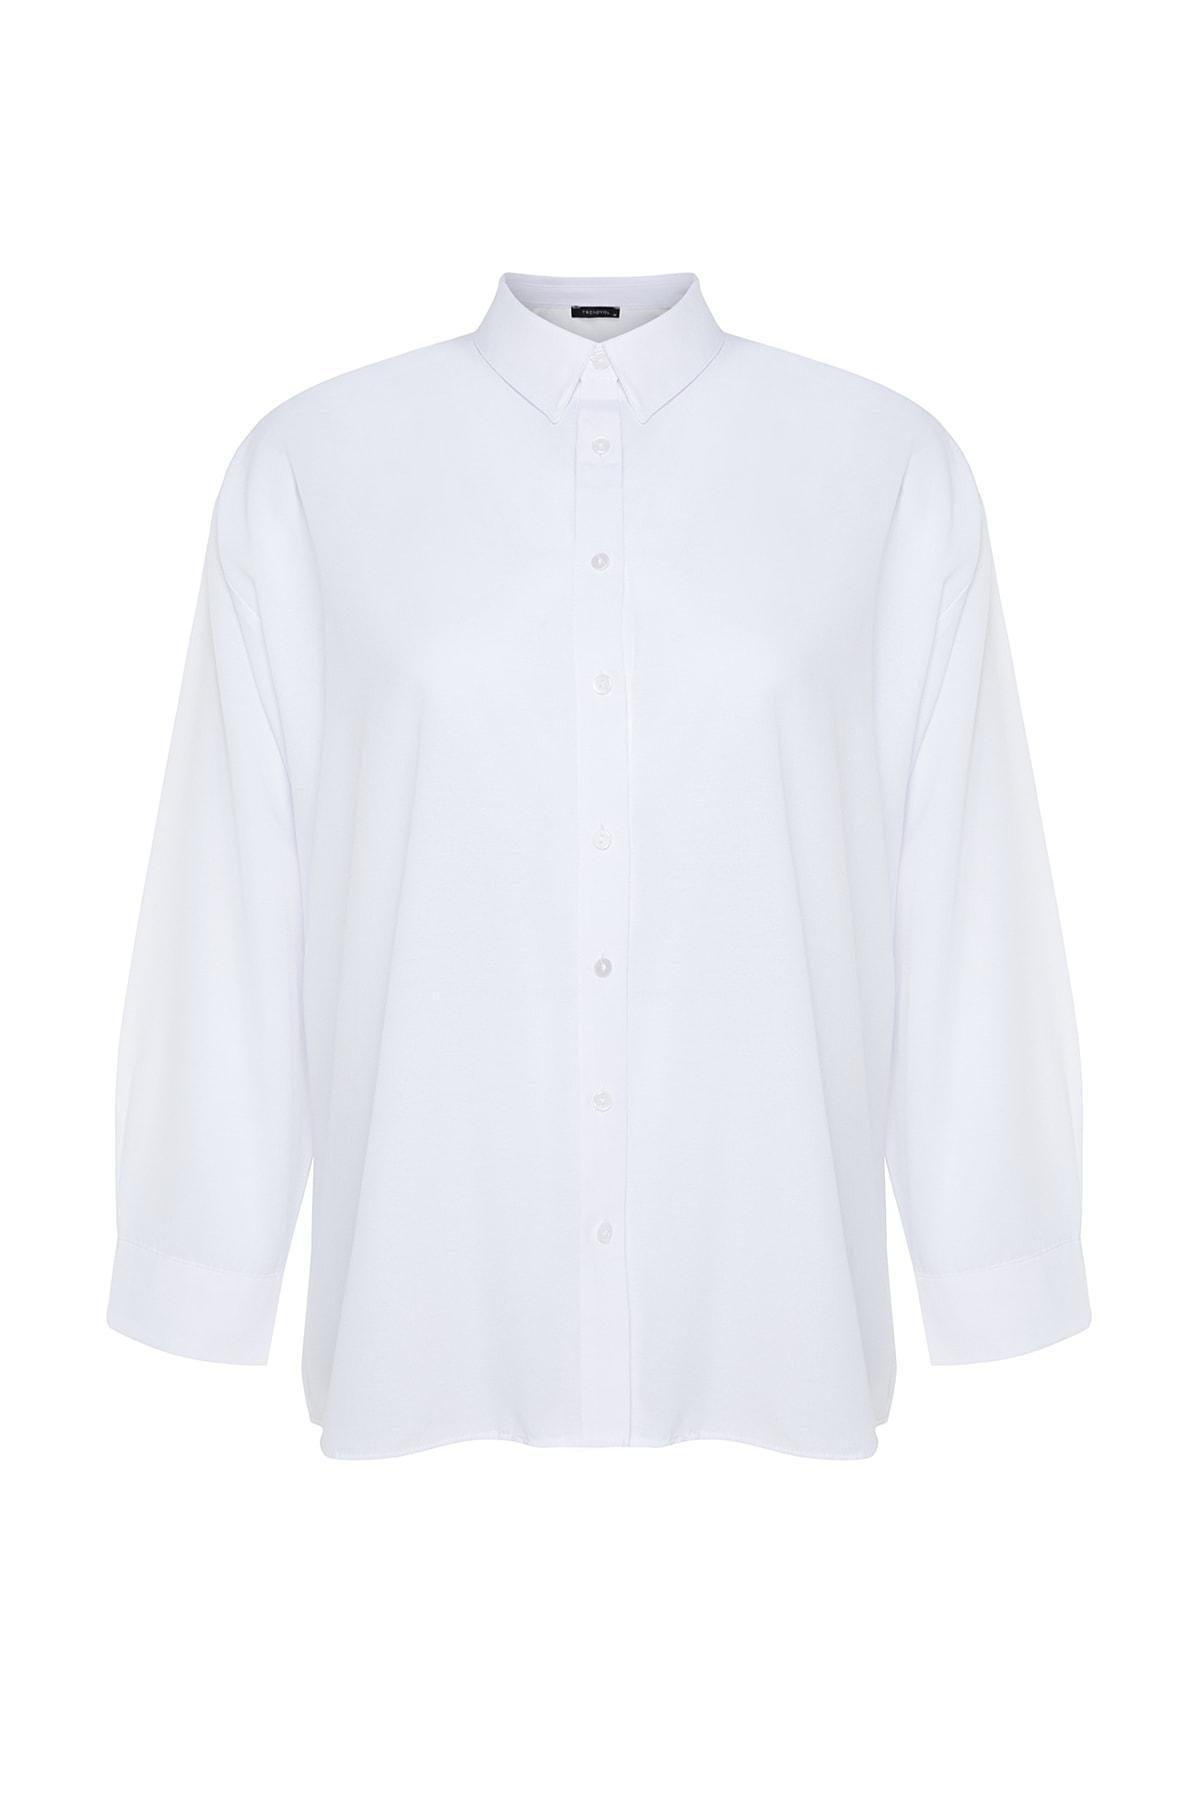 Trendyol - White Regular Plus Size Shirt